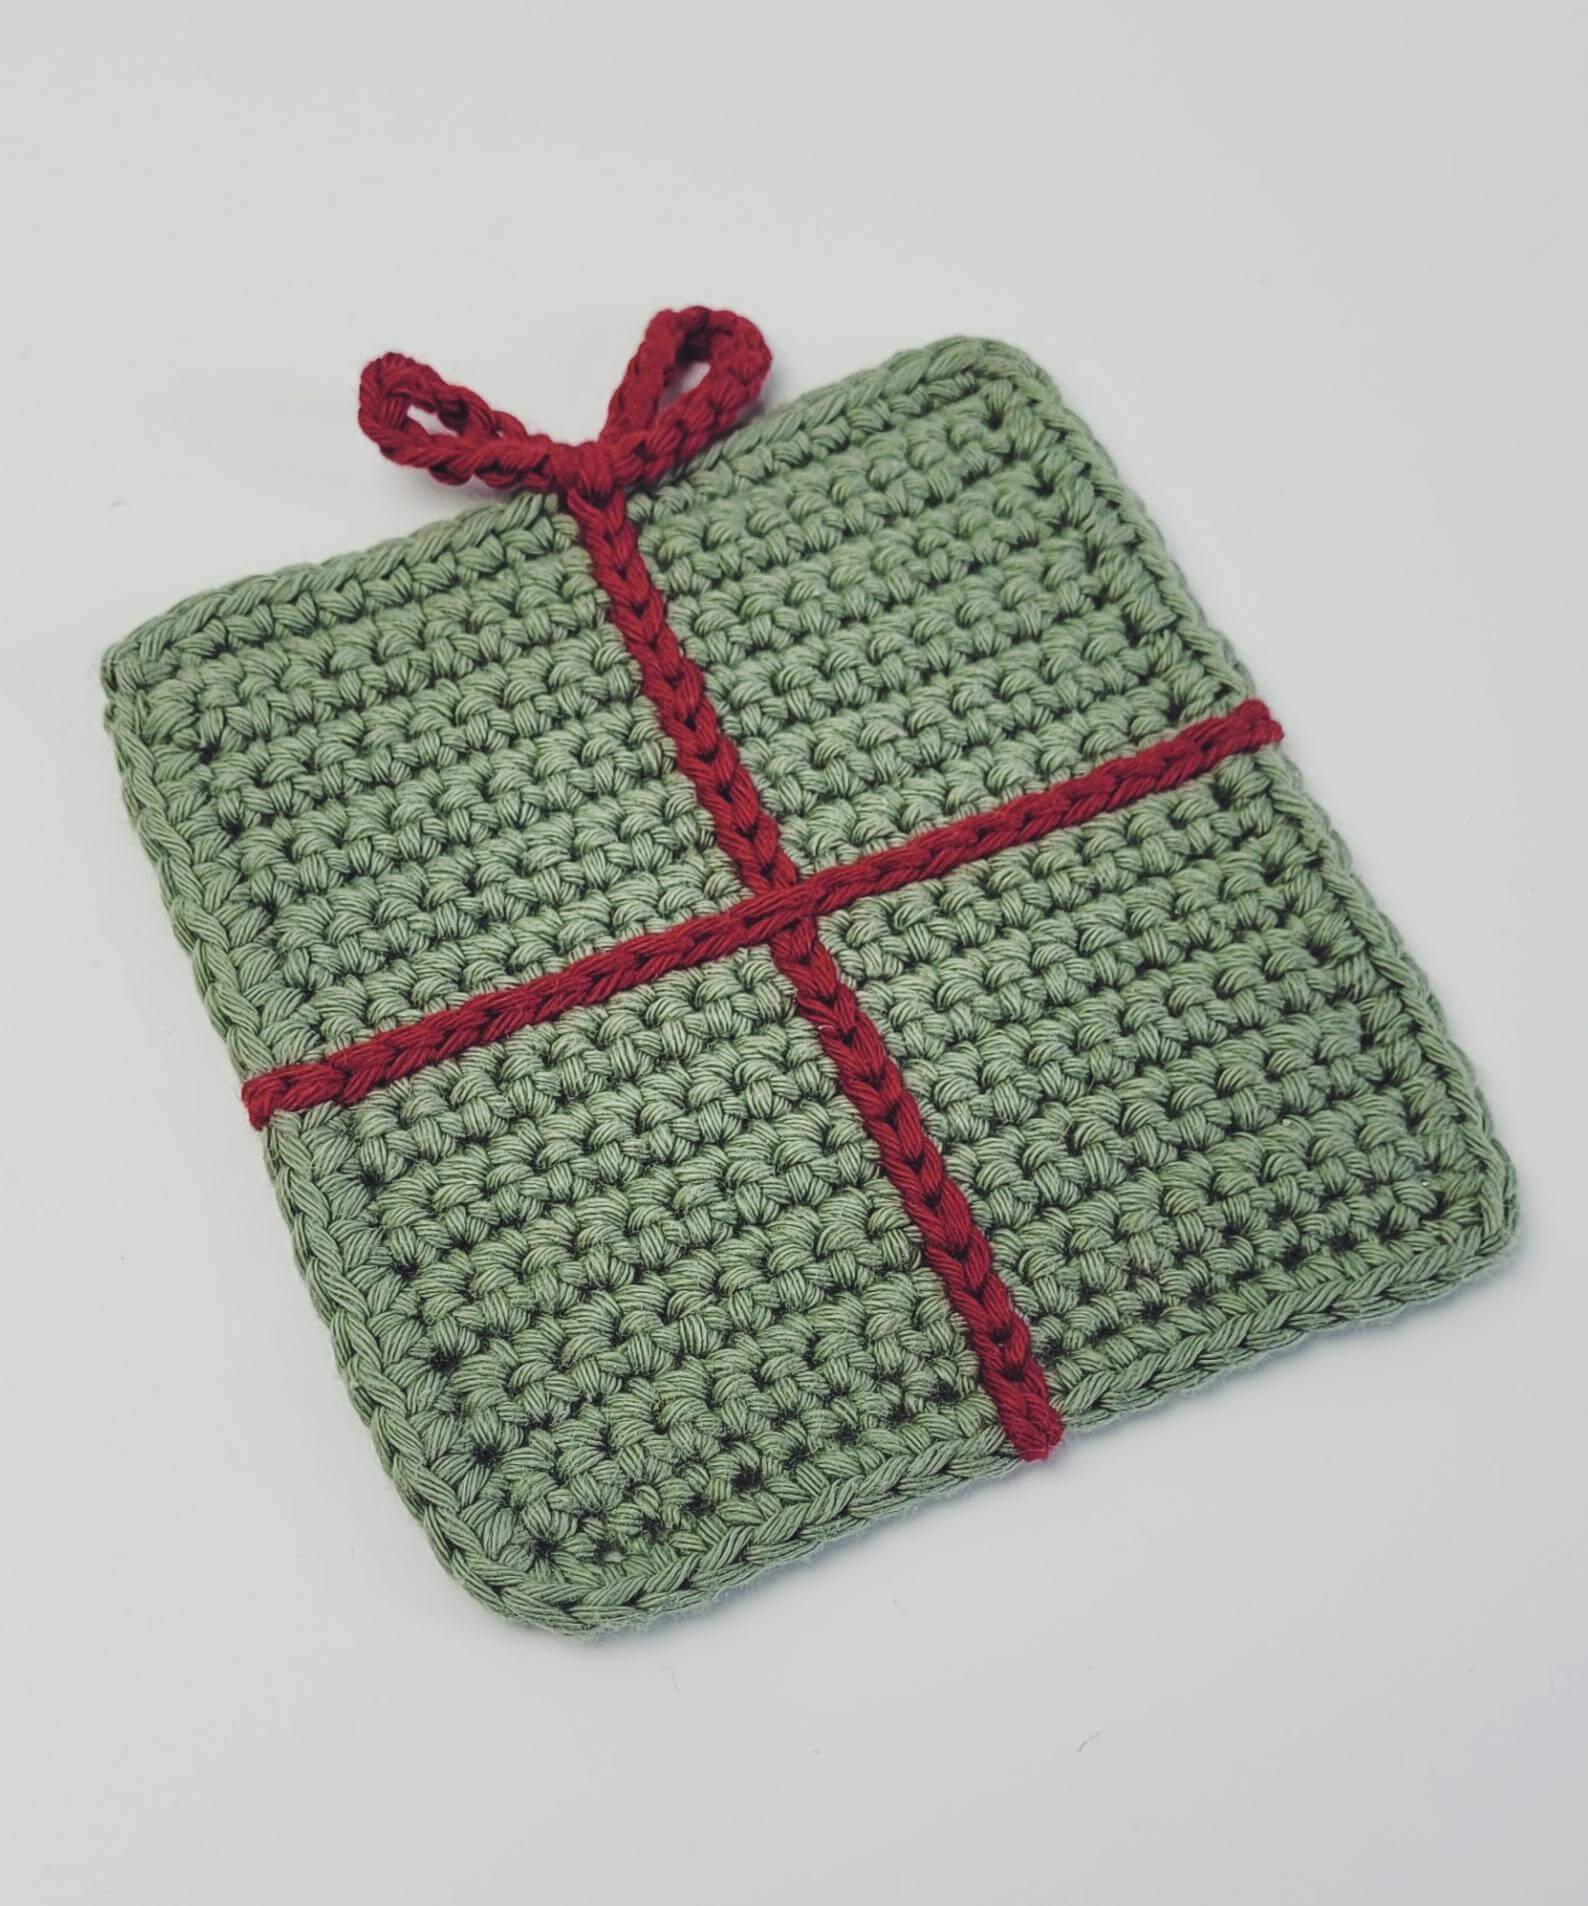 Christmas gift crochet coaster